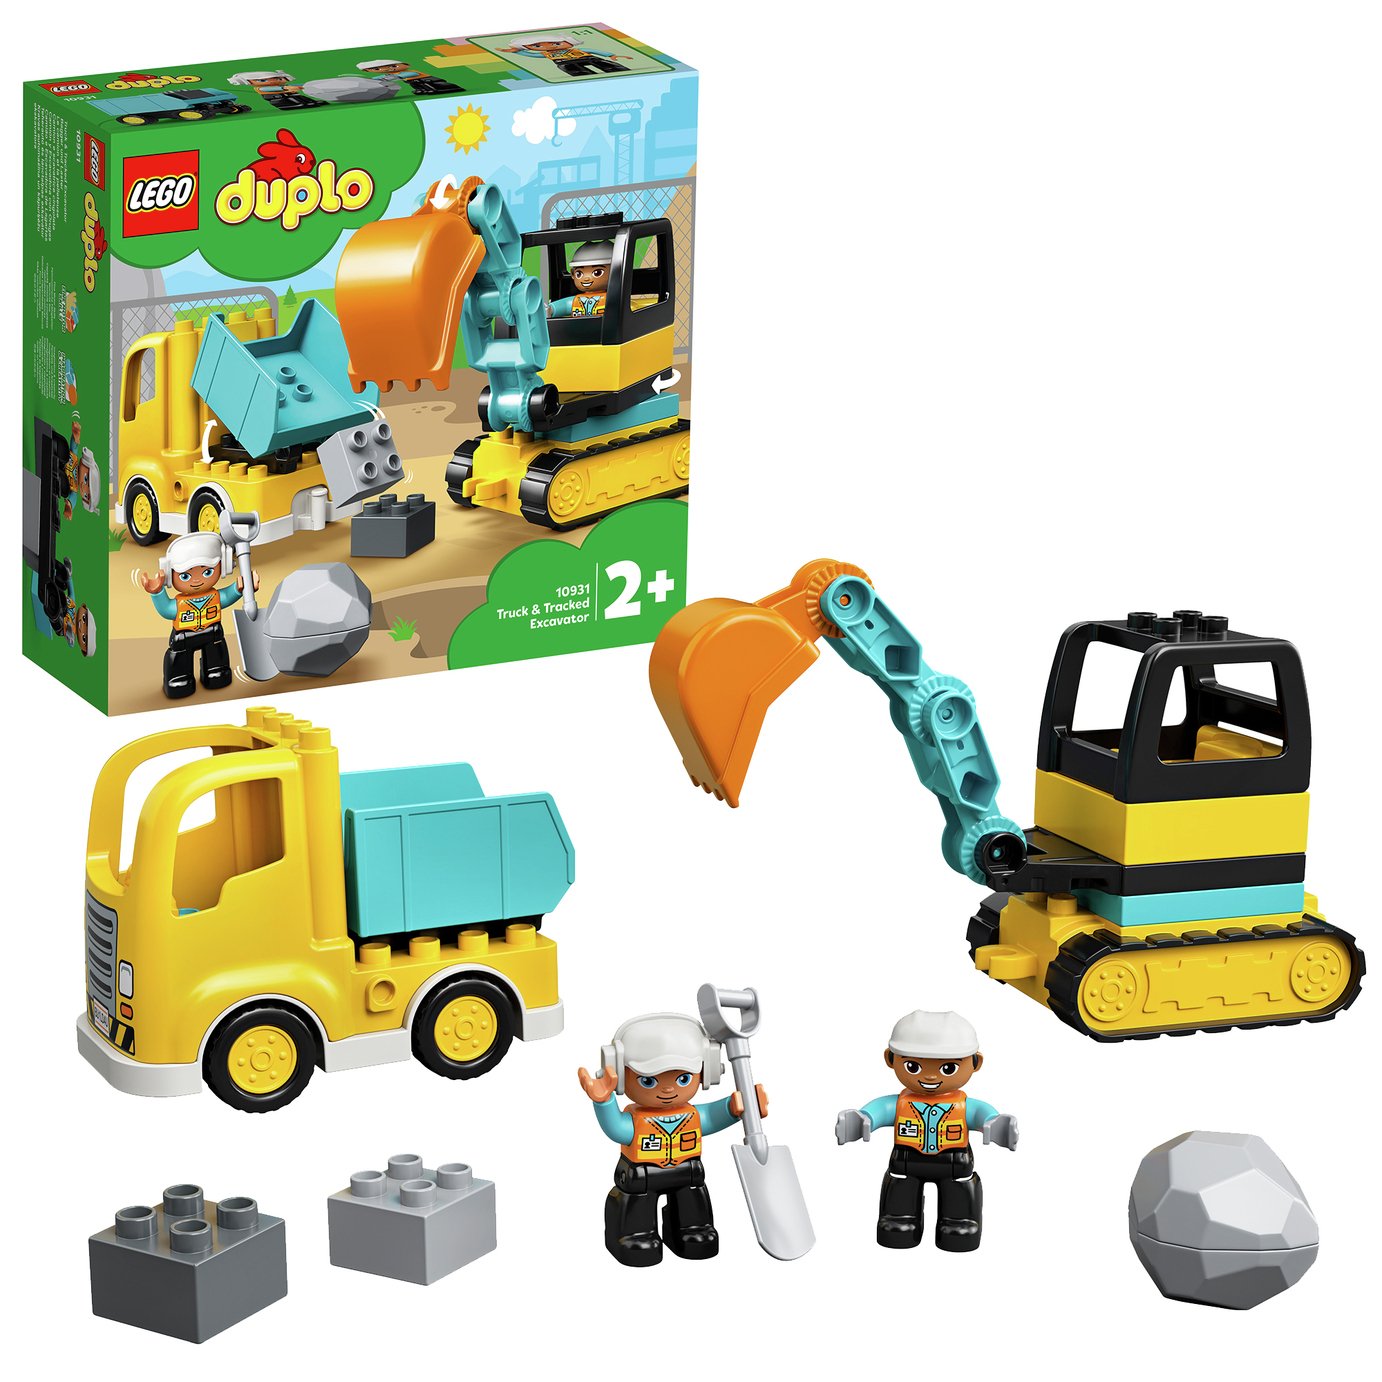 Buy LEGO DUPLO Town Truck \u0026 Tracked 